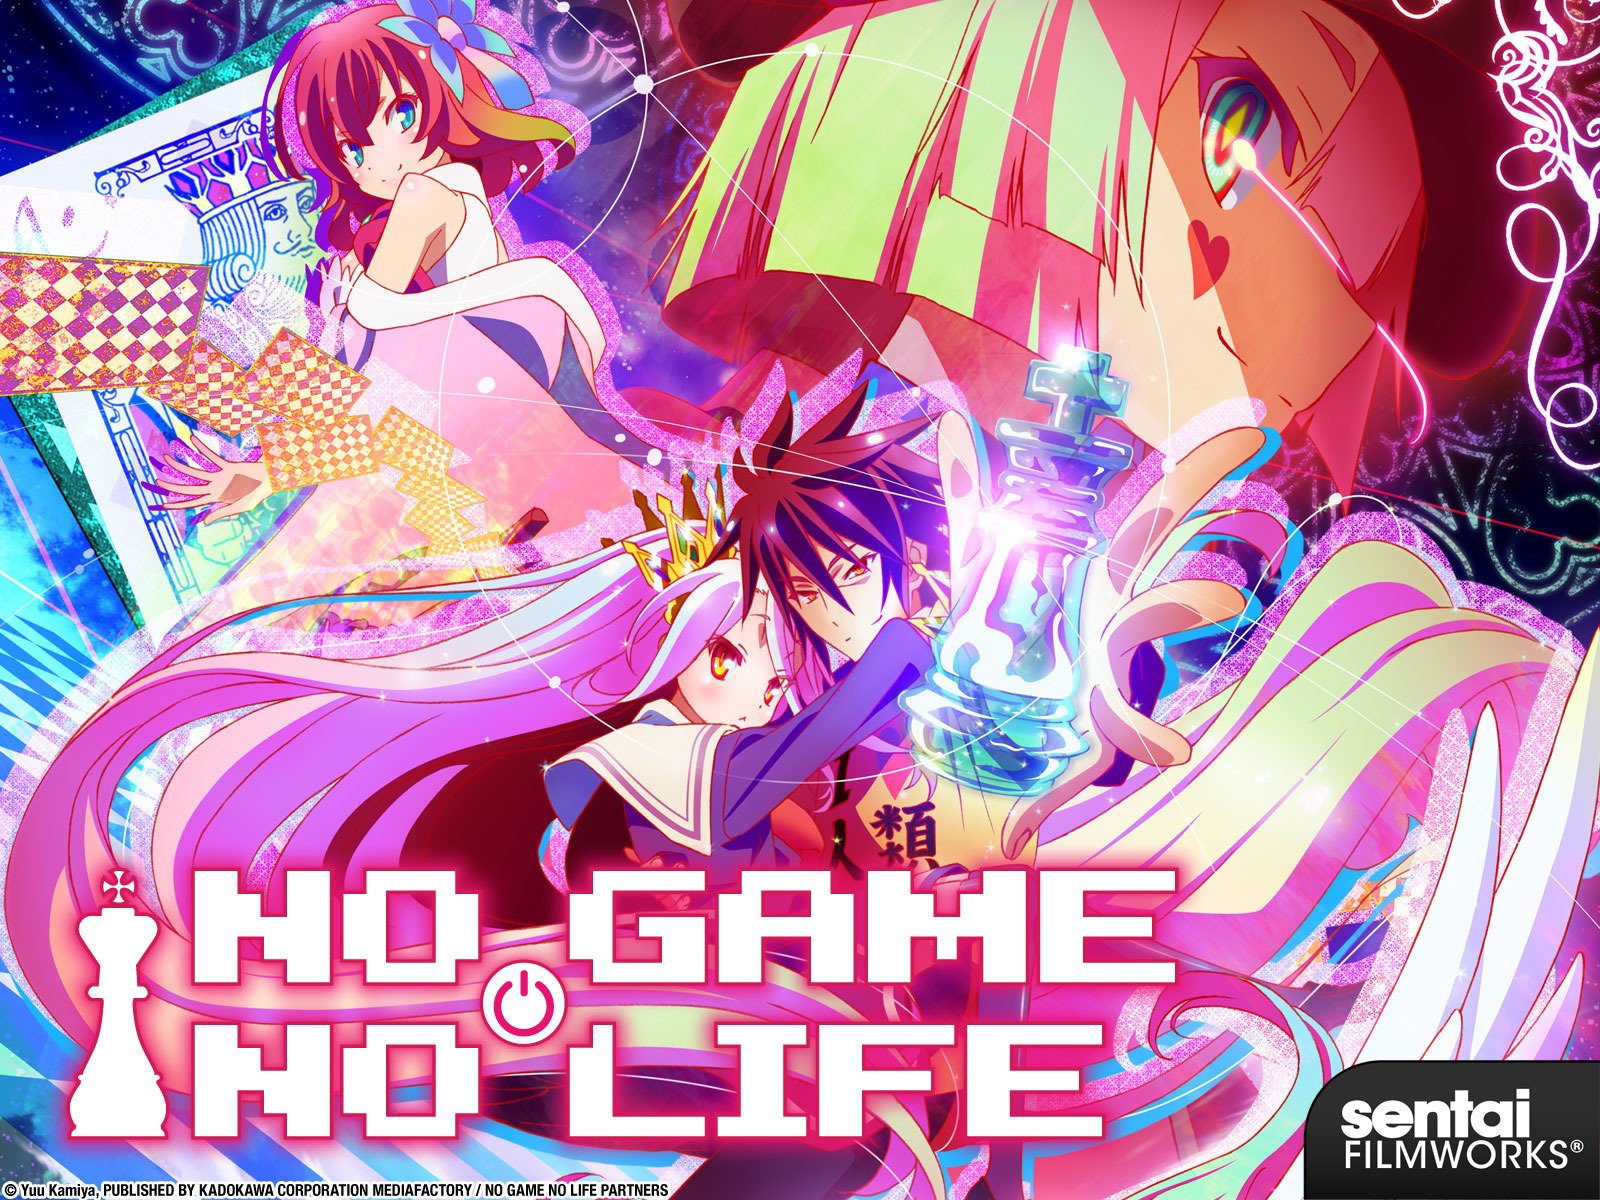 No Game No Life Logo Wallpapers